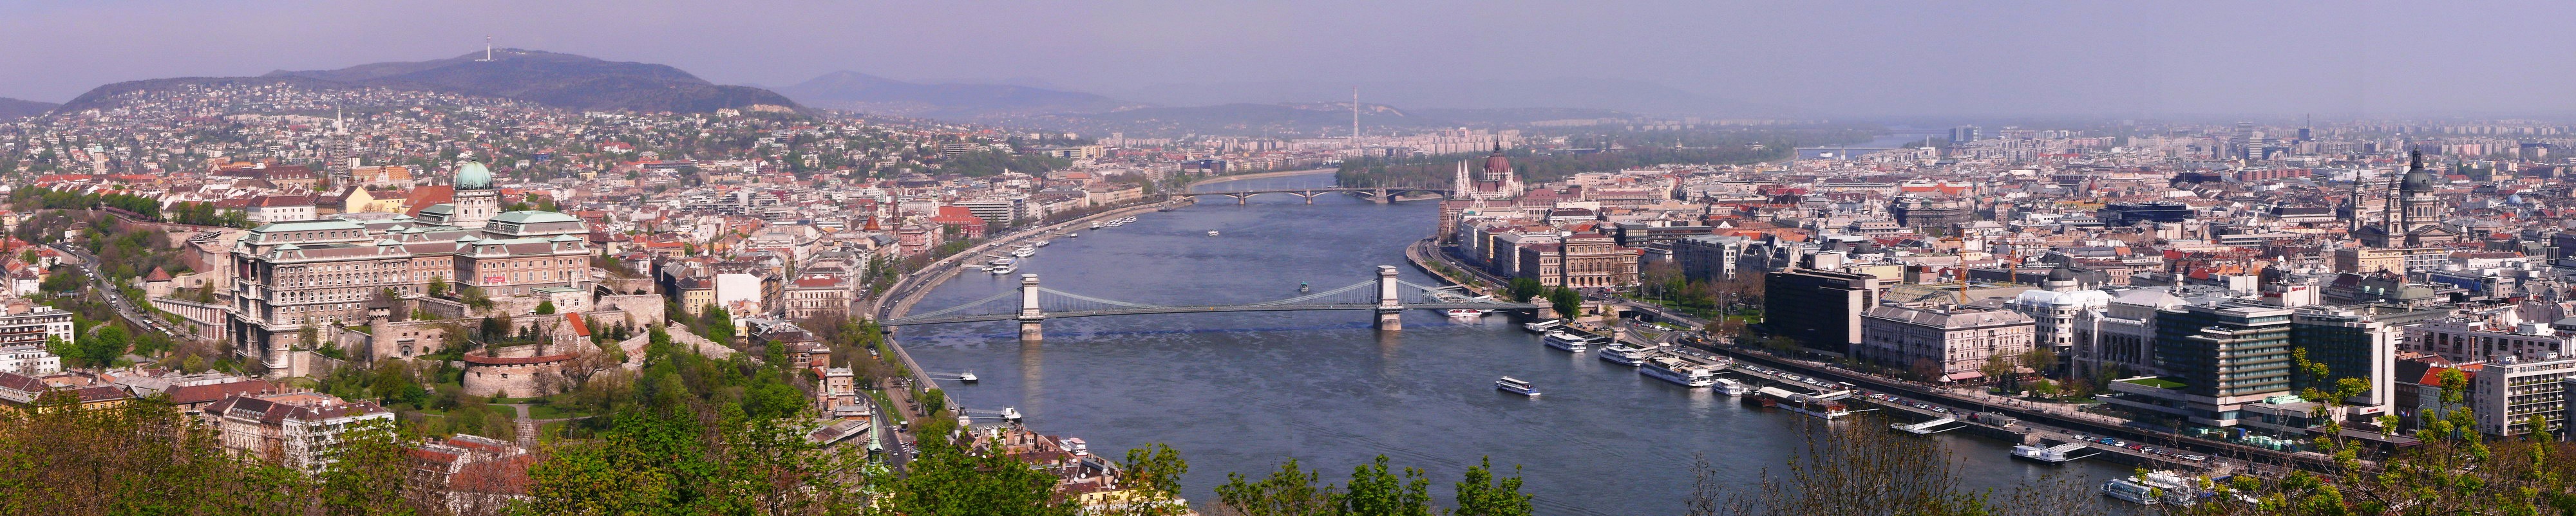 Budapest_panorama_2.jpg